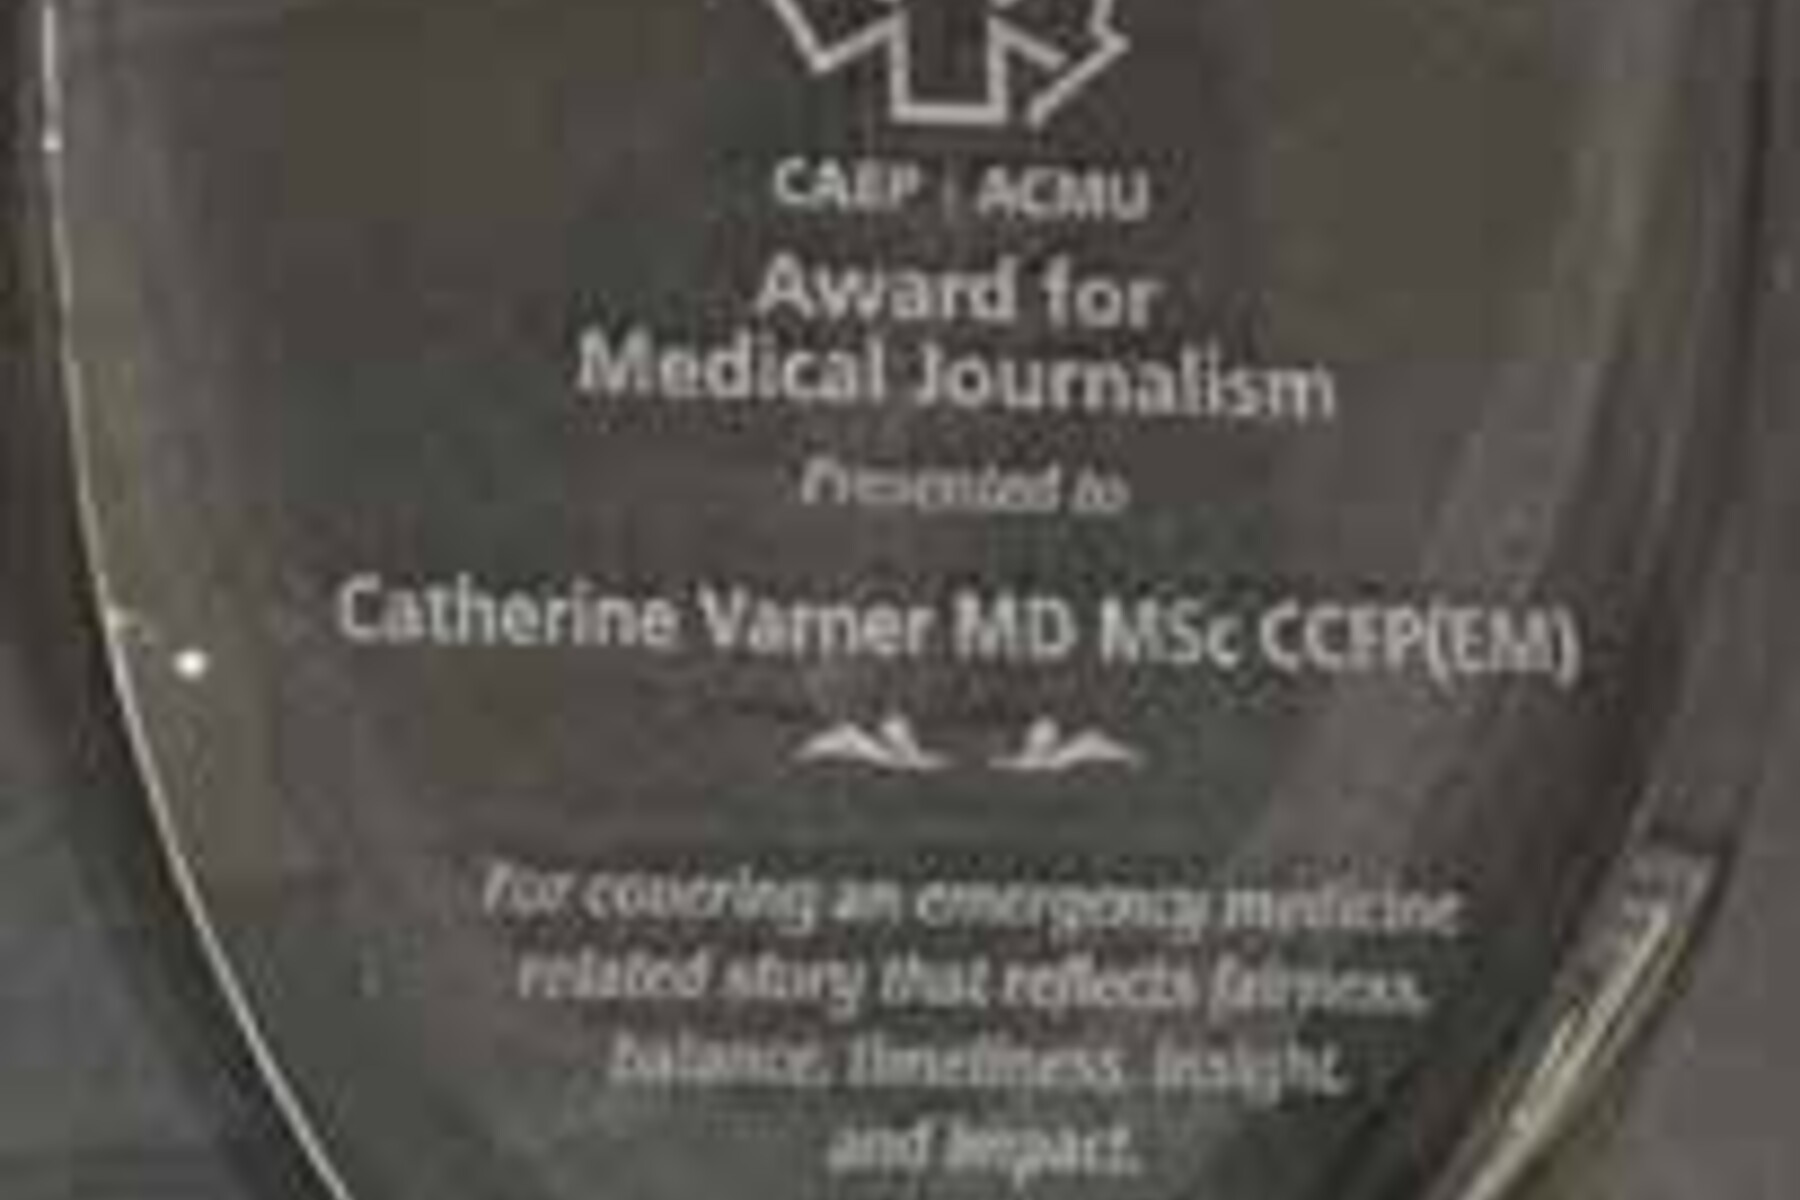 image of CAEP Award for Medical Journalism presented to Catherine Varner